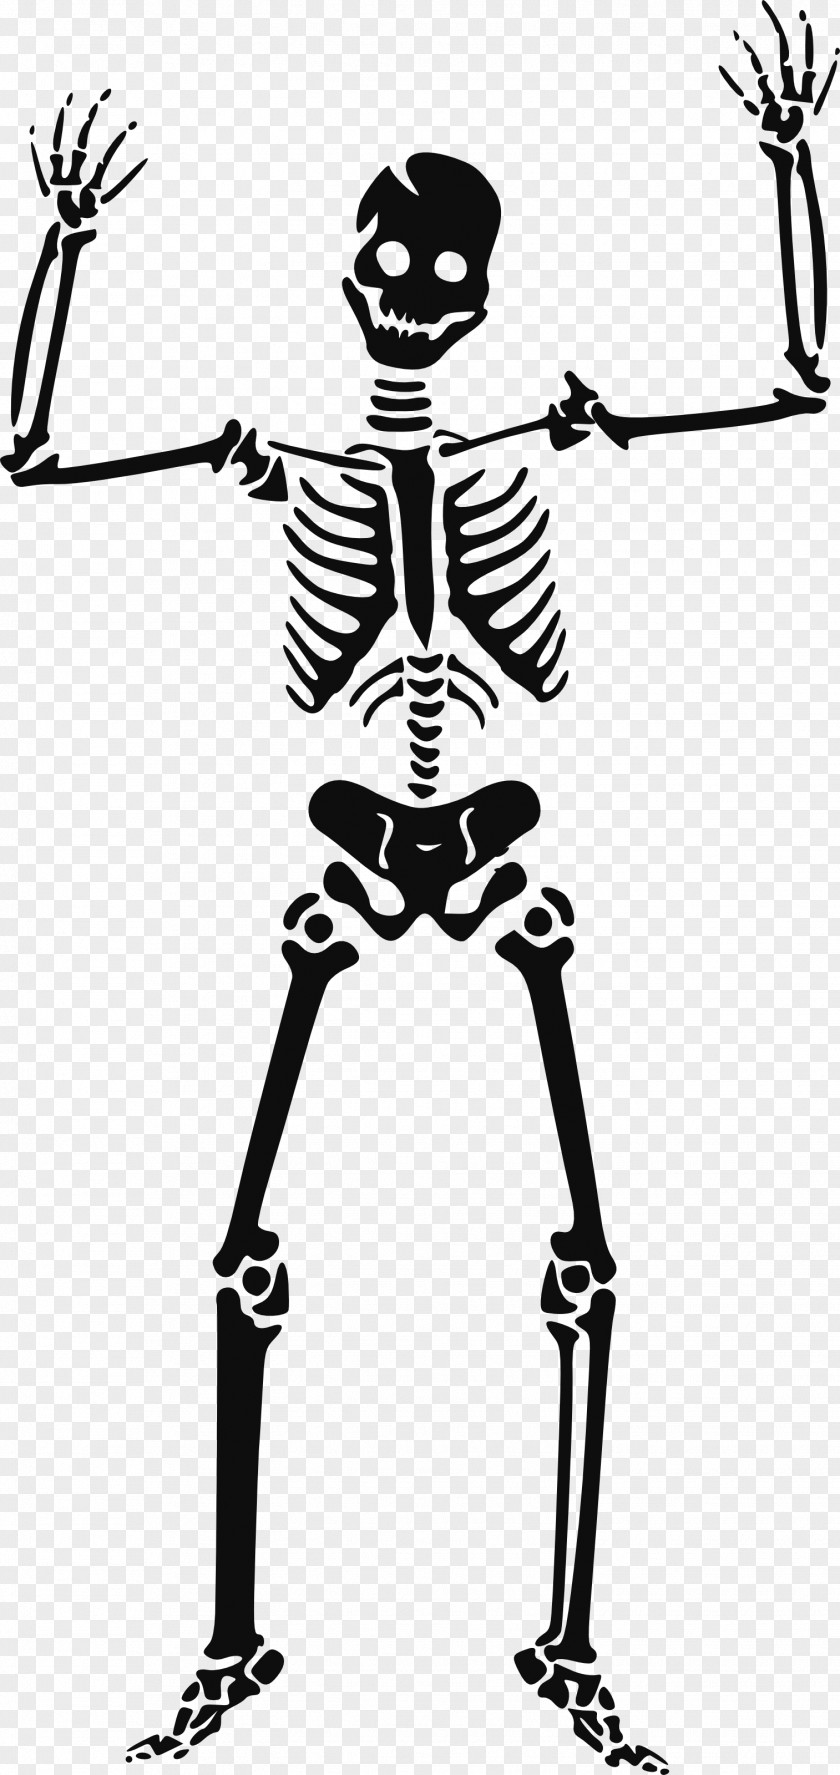 Skeleton Siluet Image Skull Clip Art PNG